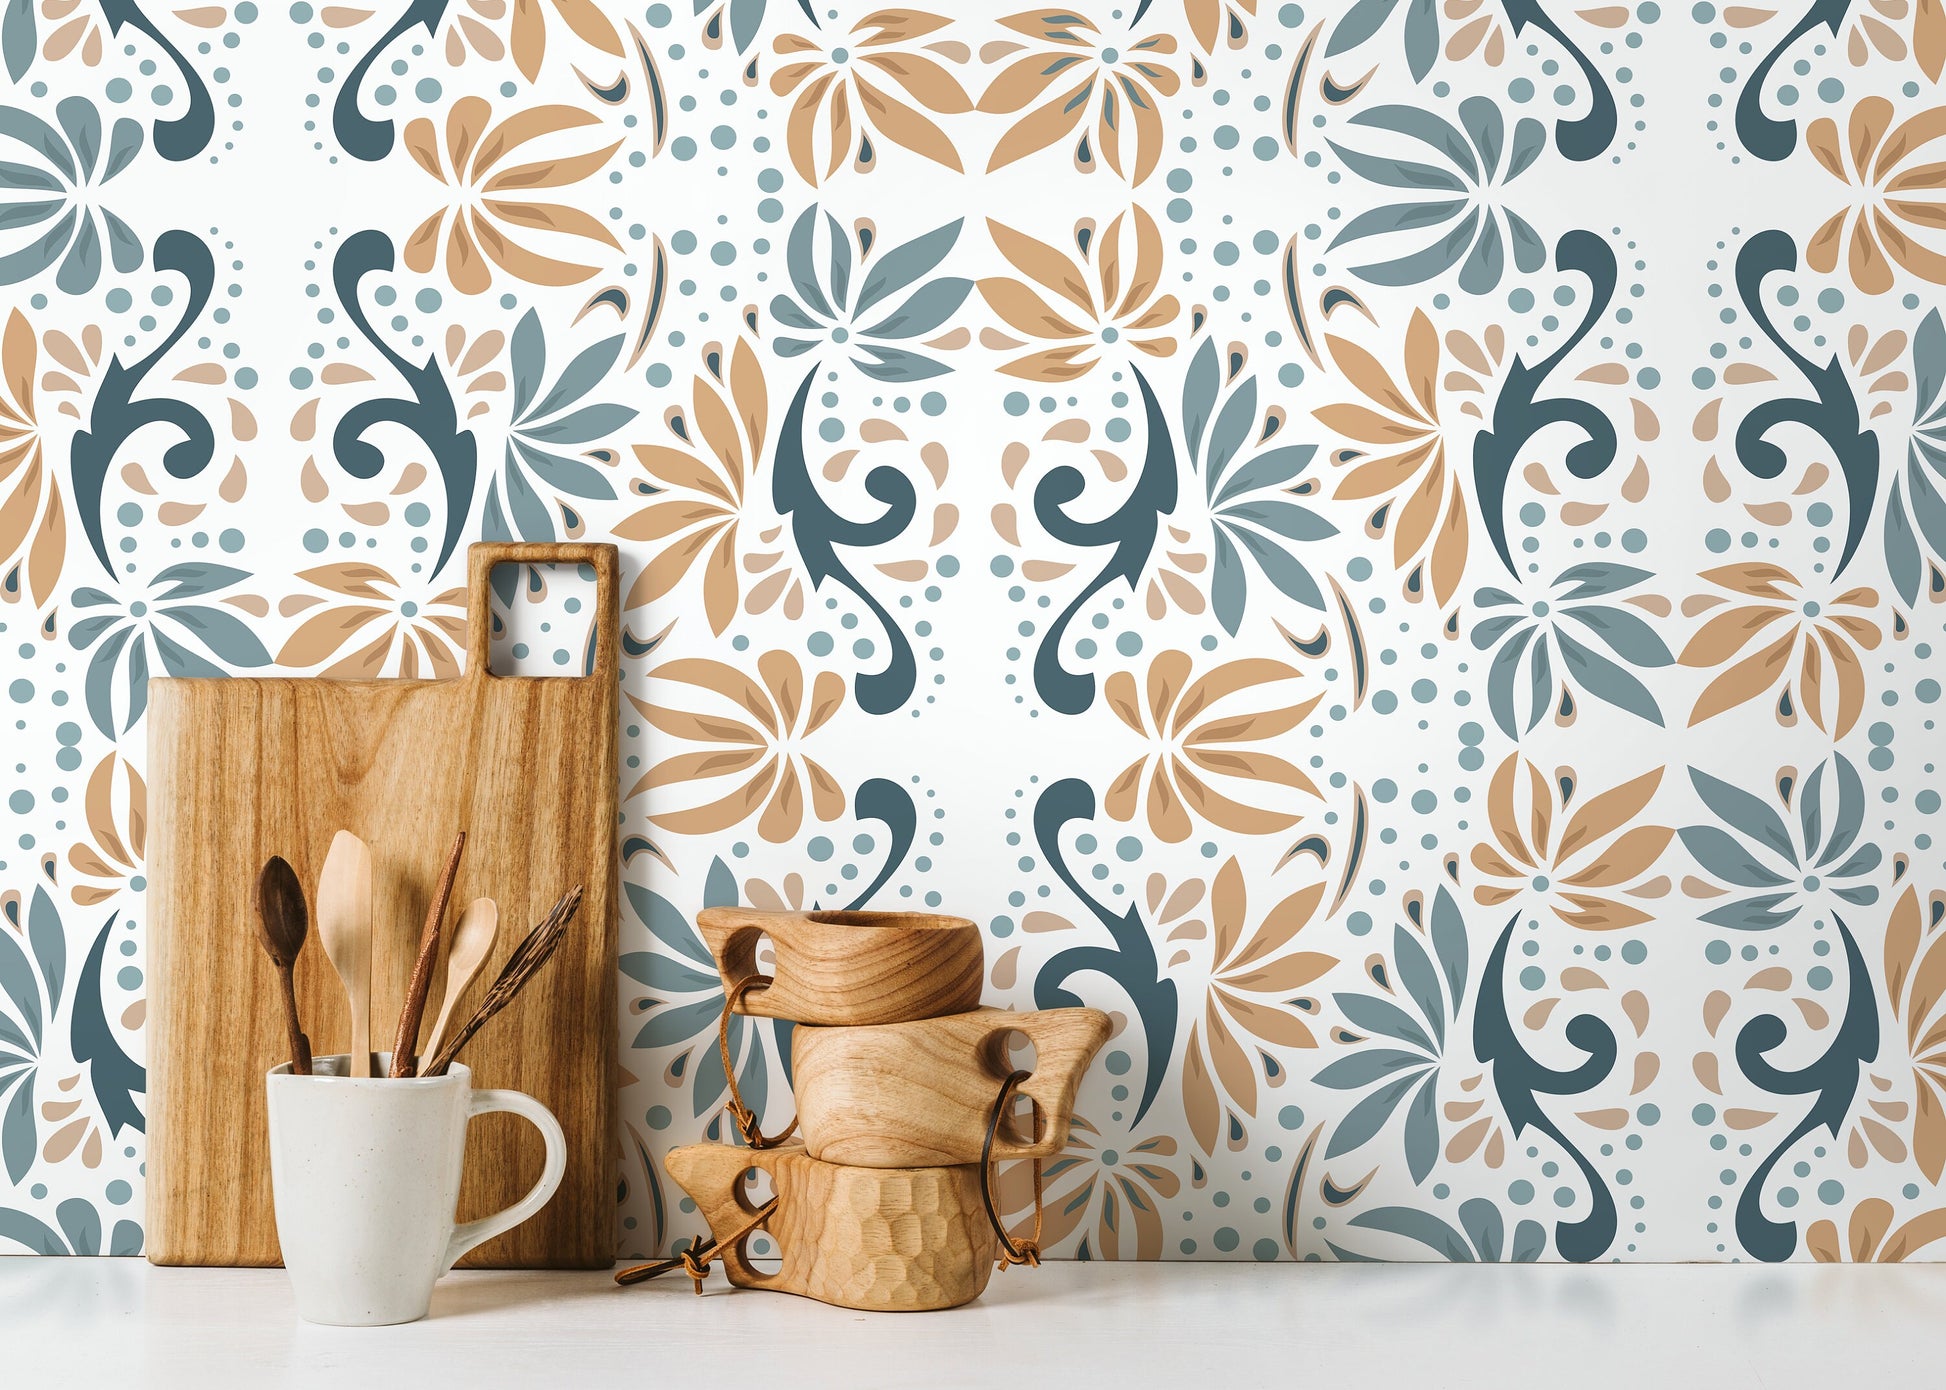 Modern Floral Wallpaper / Peel and Stick Wallpaper Removable Wallpaper Home Decor Wall Art Wall Decor Room Decor - D250